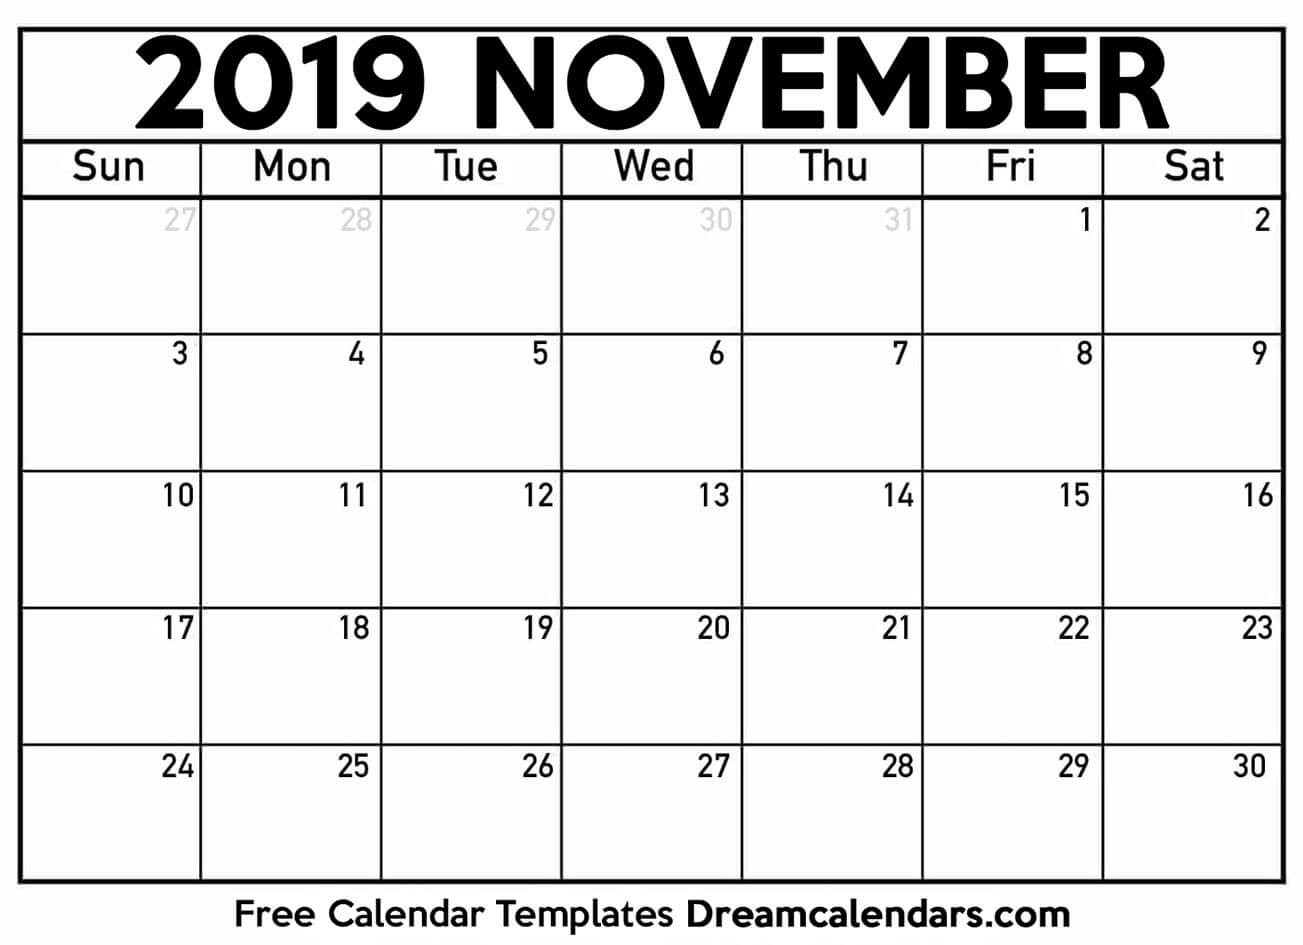 november-2019-calendars-printable-calendar-2019-november-2019